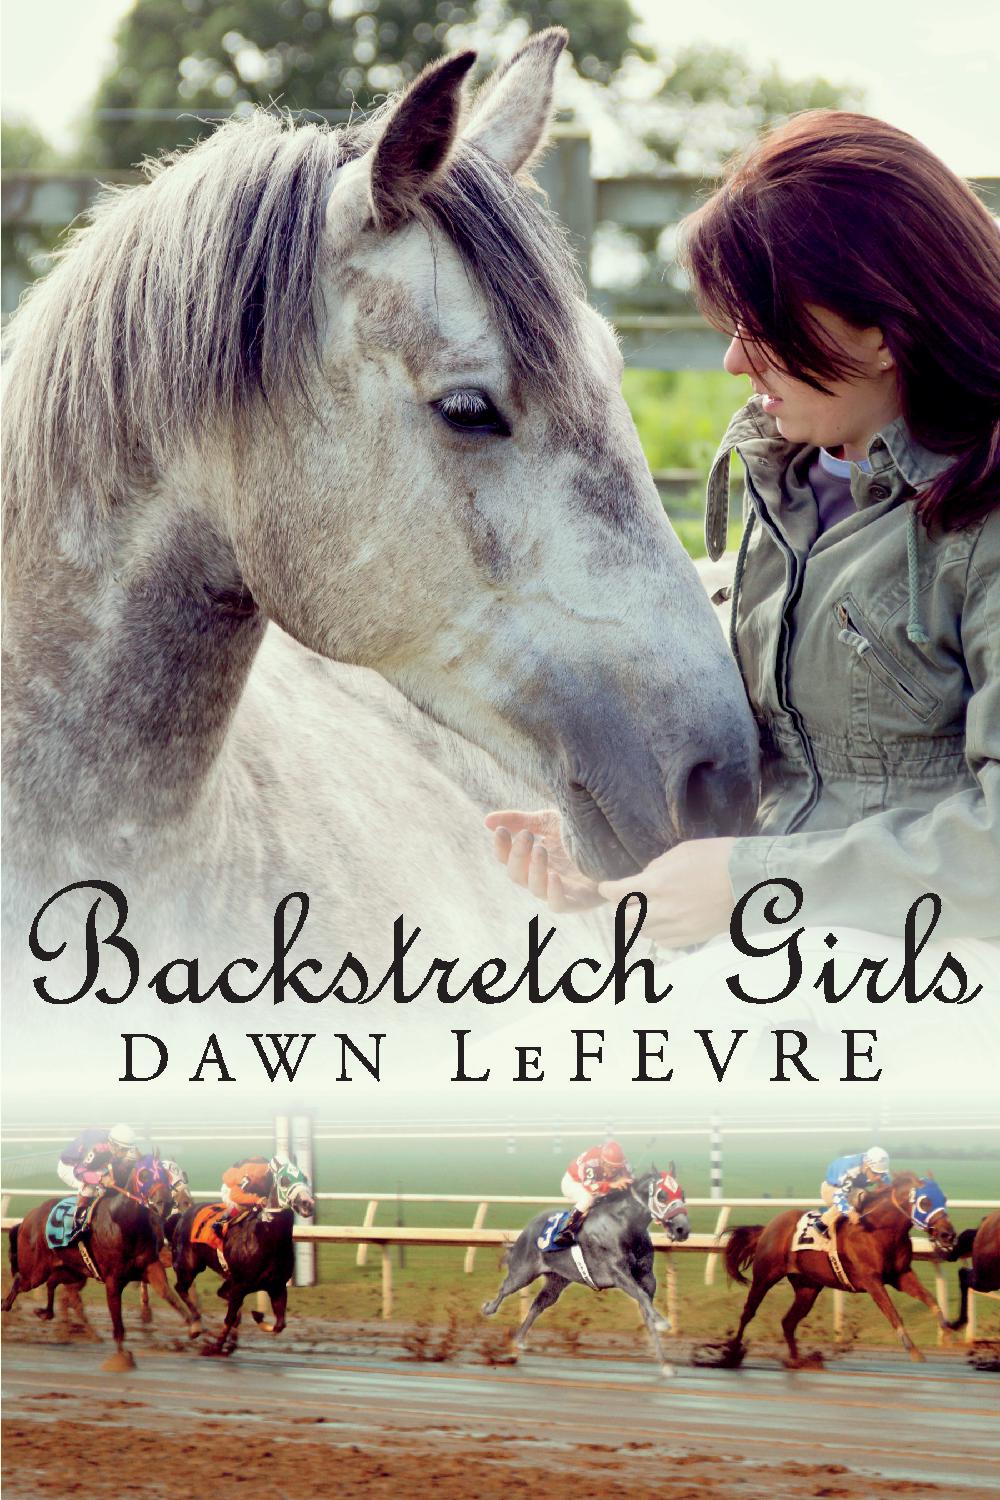 Backstretch Girls by Author Dawn LeFevre